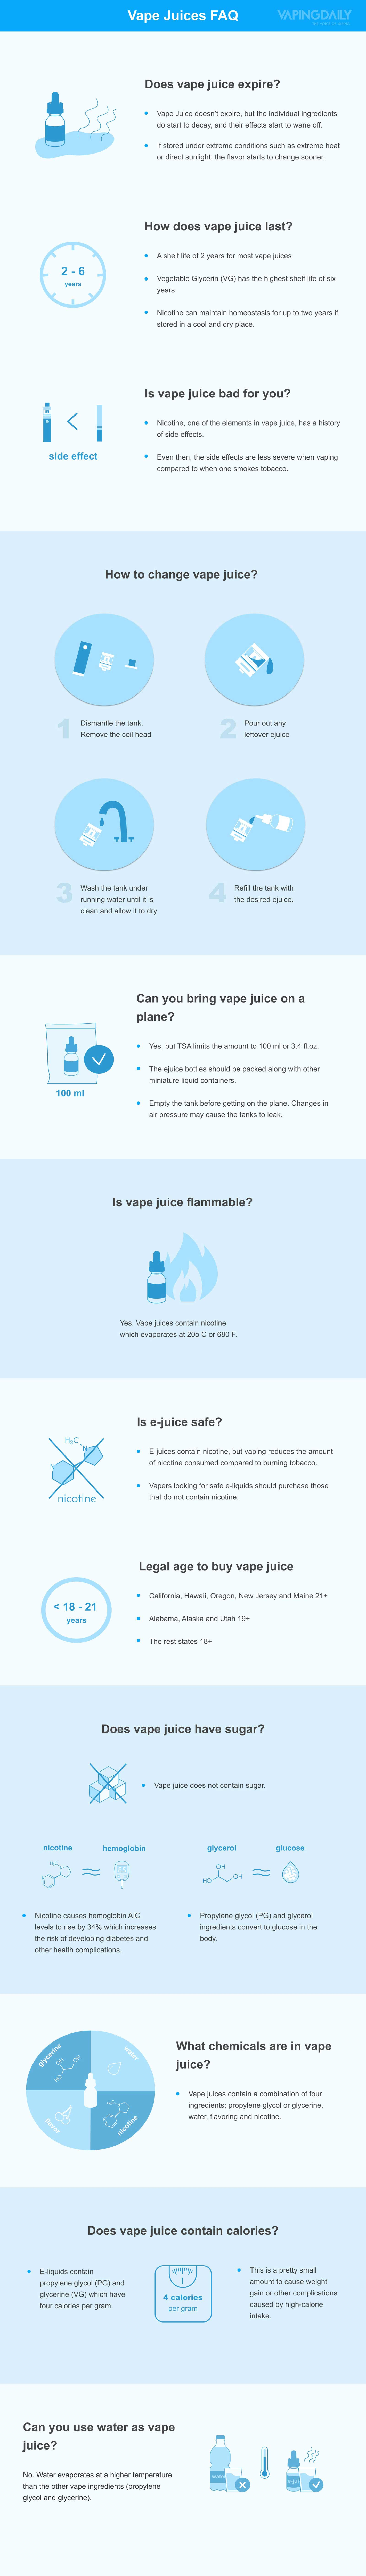 Vape Juices and E-Liquids FAQ - Infographic